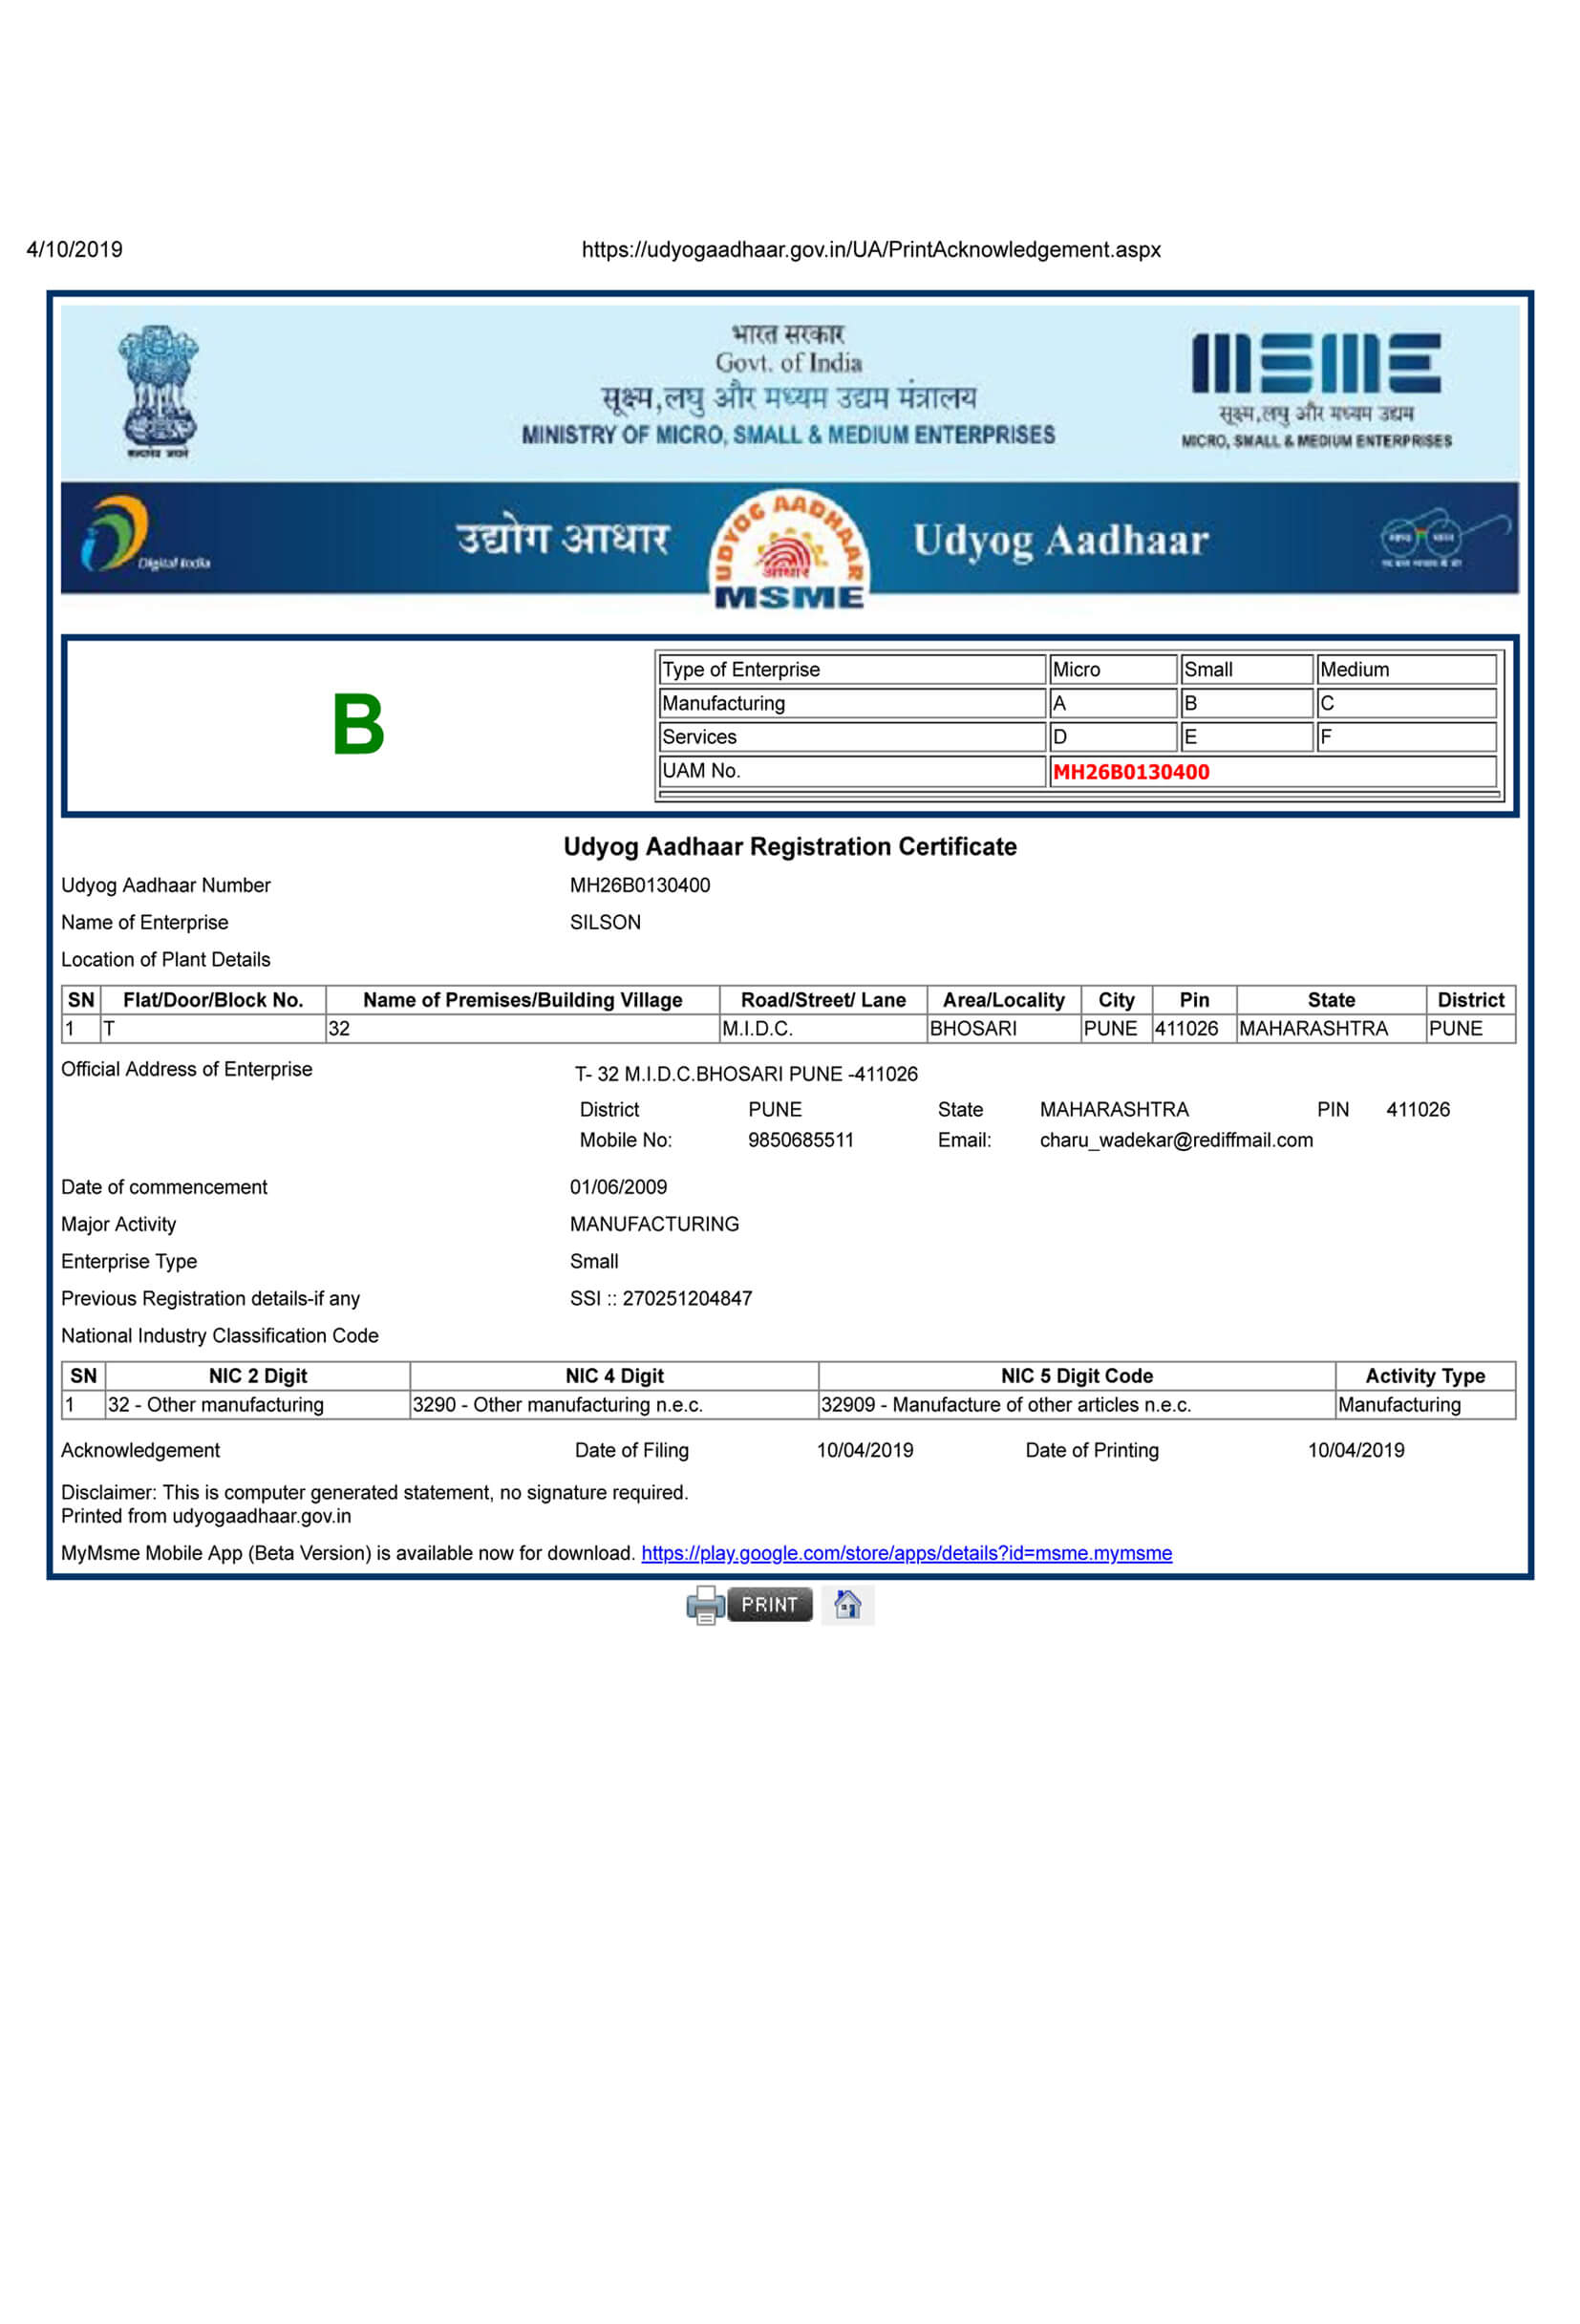 Udyog Aadhaar Certificates